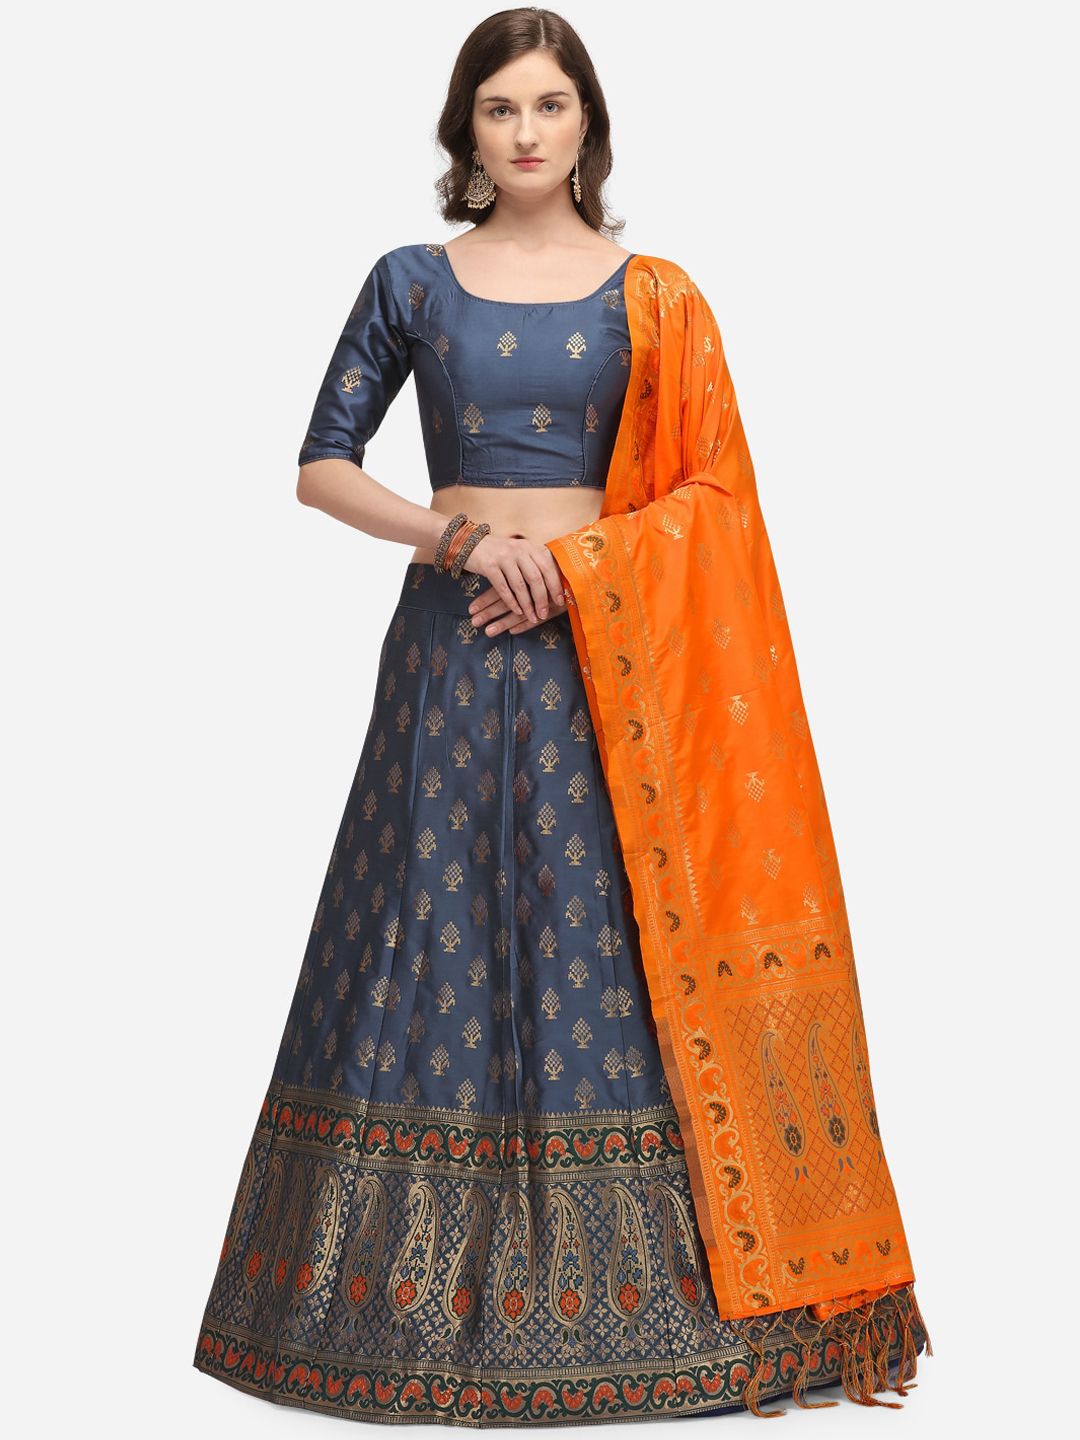 JATRIQQ Grey & Orange Woven Design Semi-Stitched Lehenga & Unstitched Blouse with Dupatta Price in India